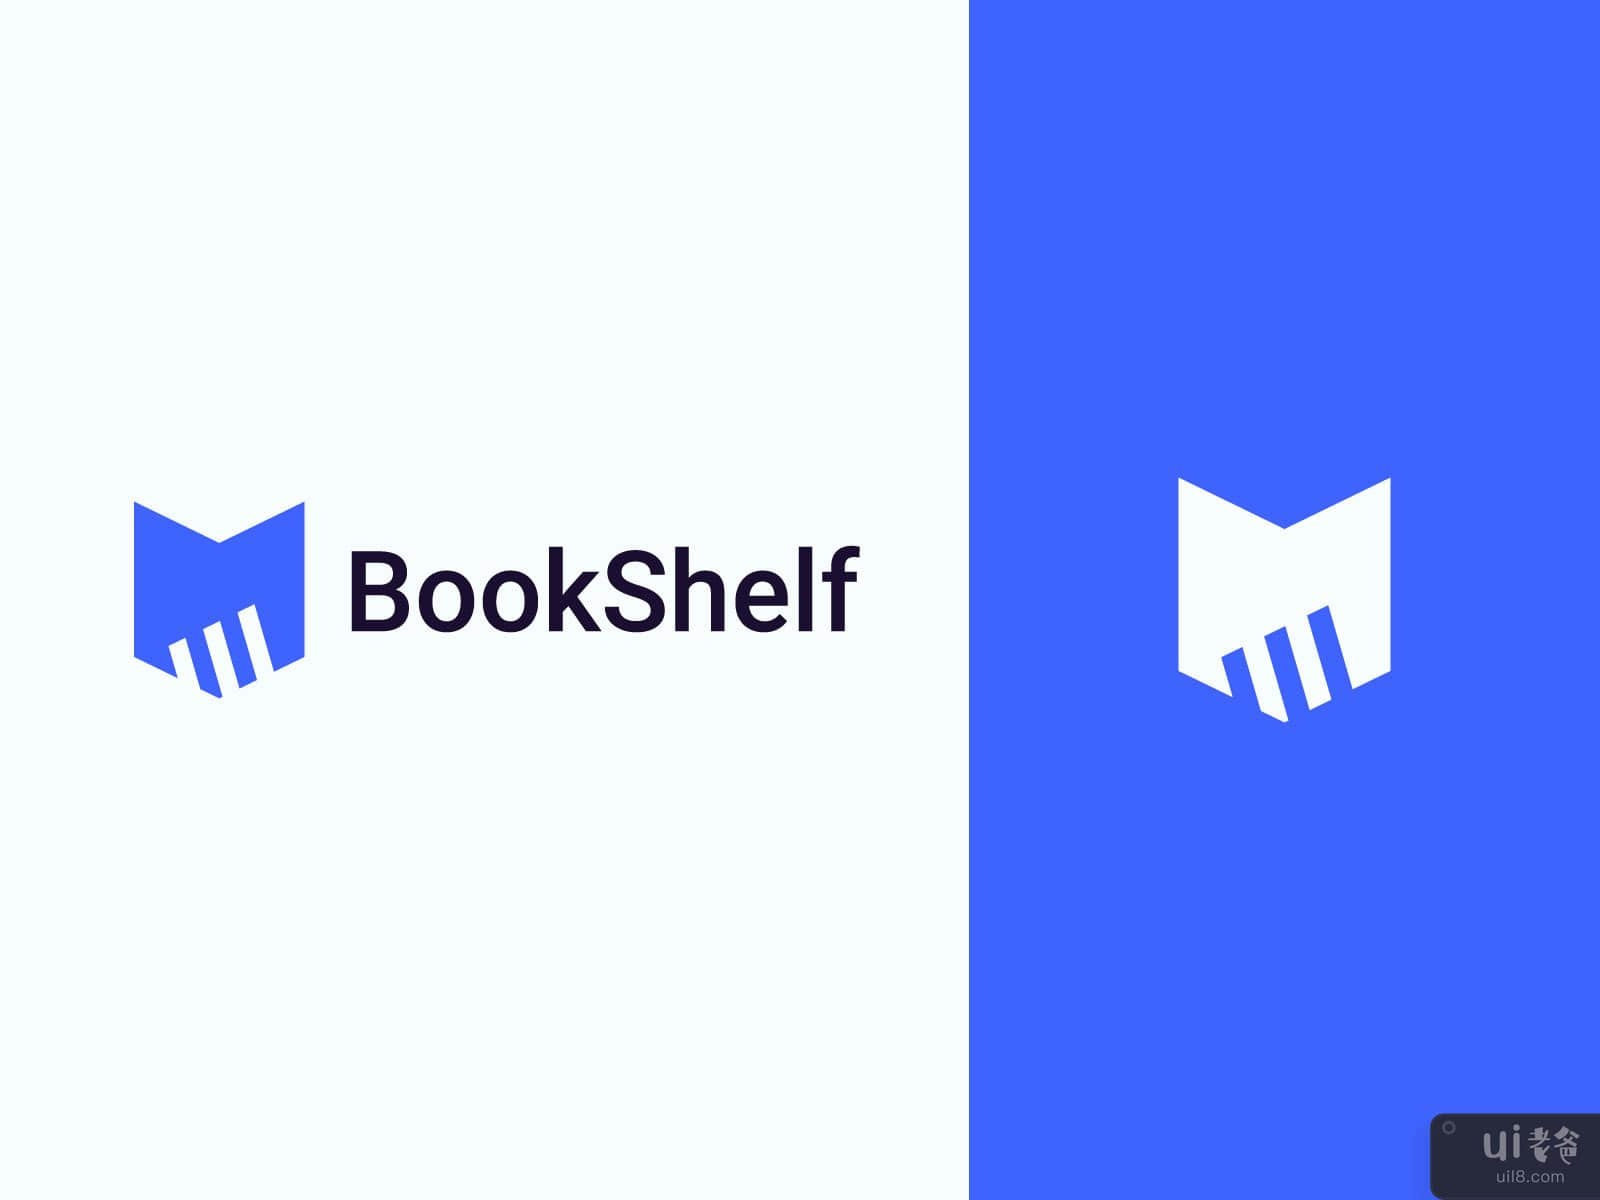 BookShelf , Book shelf logo